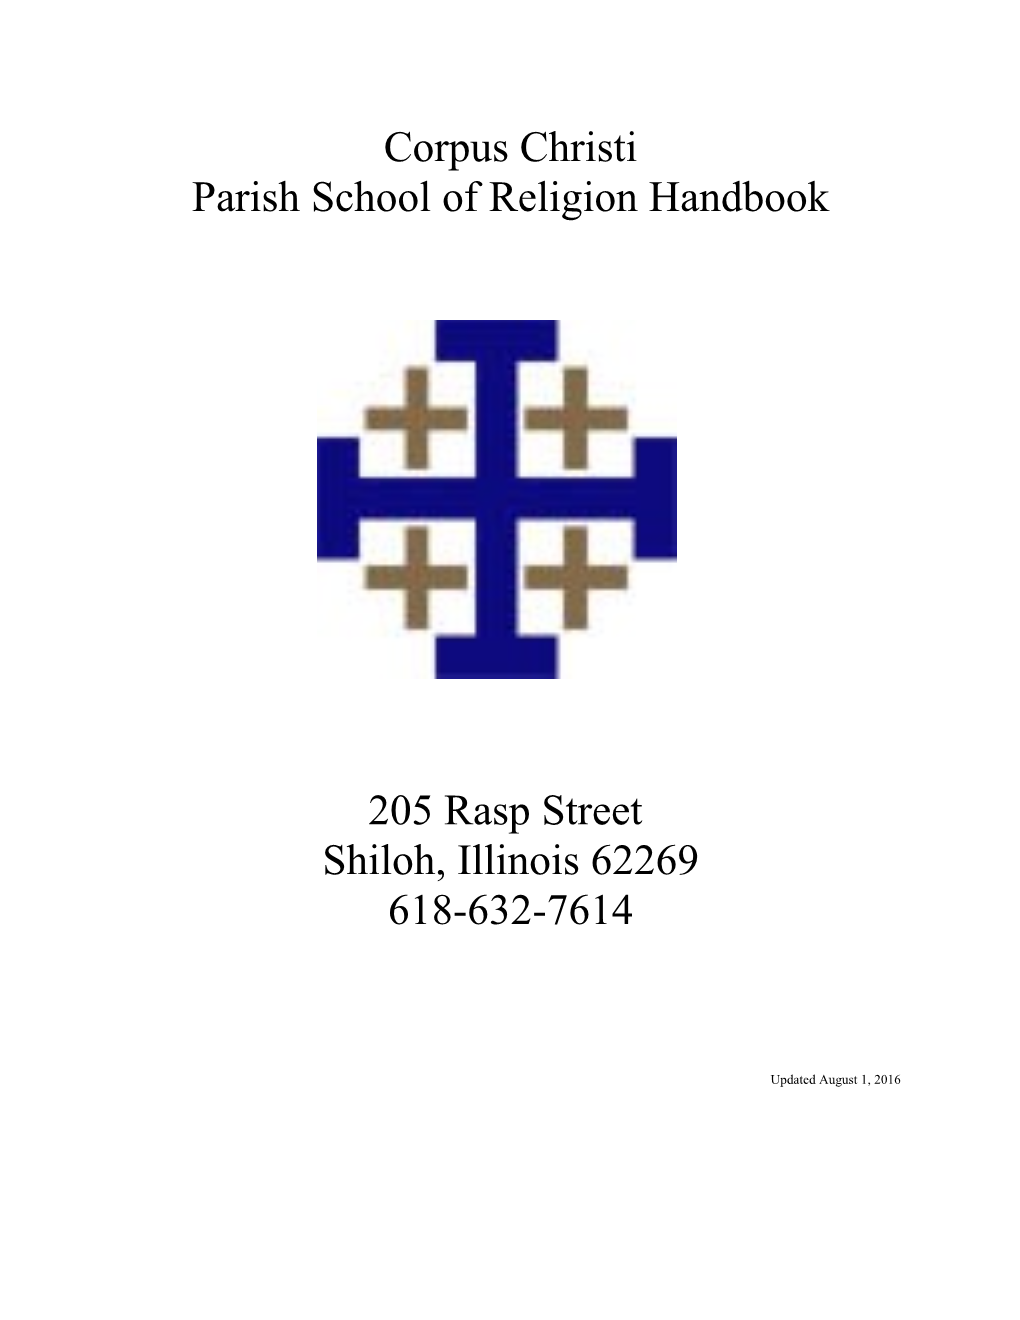 Parish School of Religion Handbook